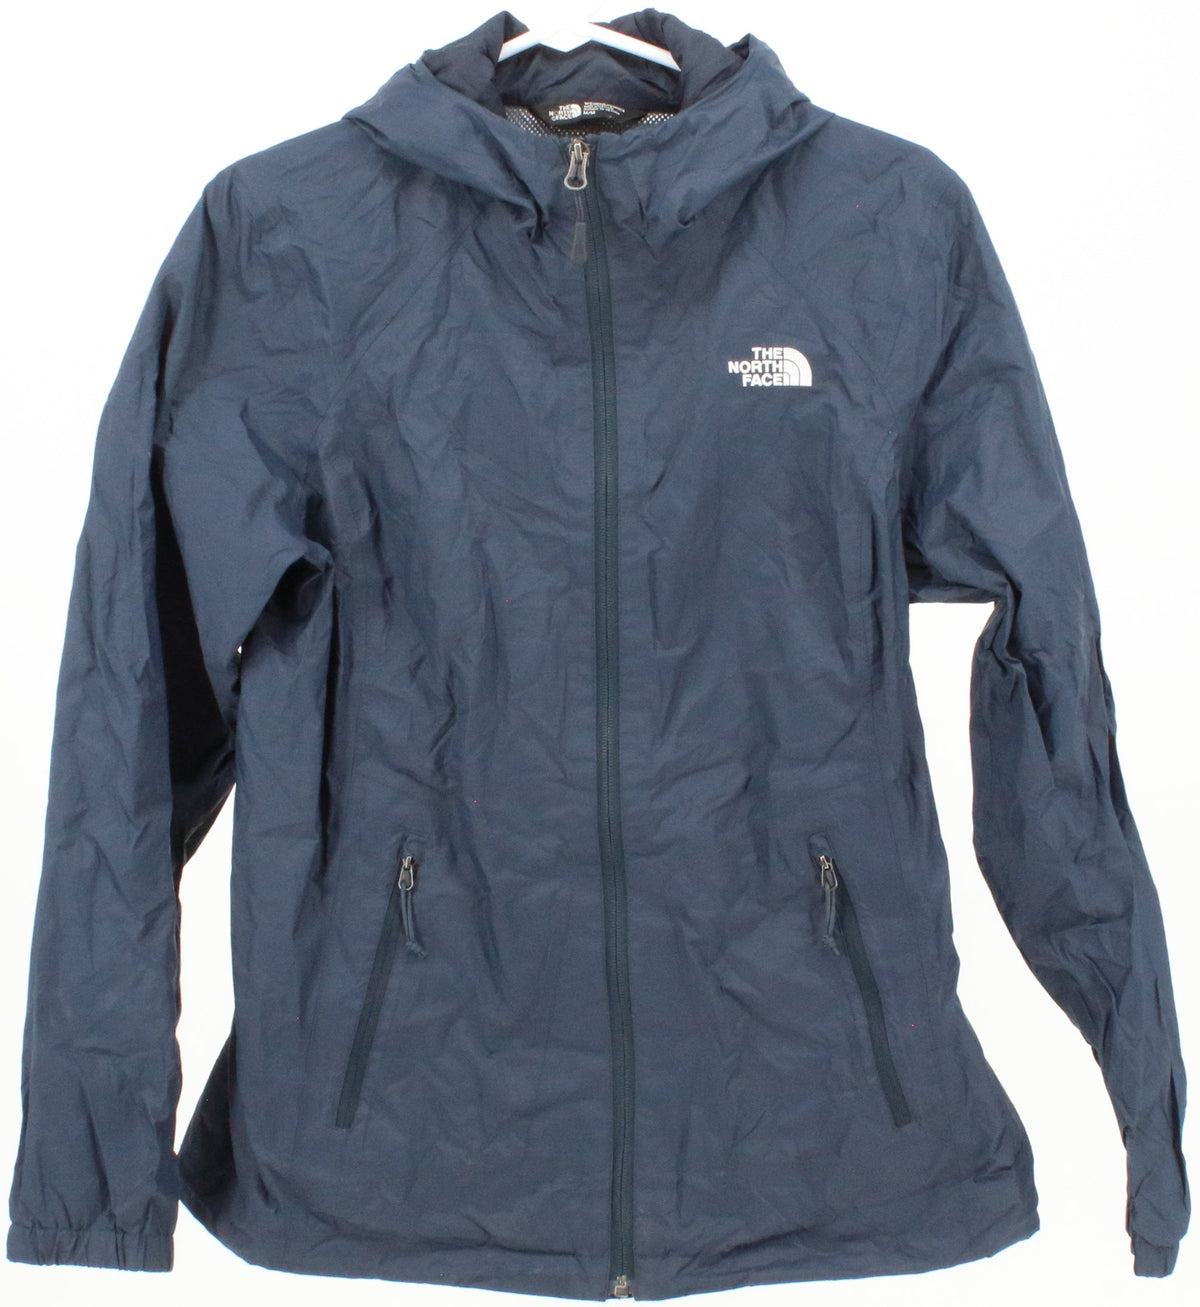 The North Face Women's DryVent Navy Blue Nylon Jacket